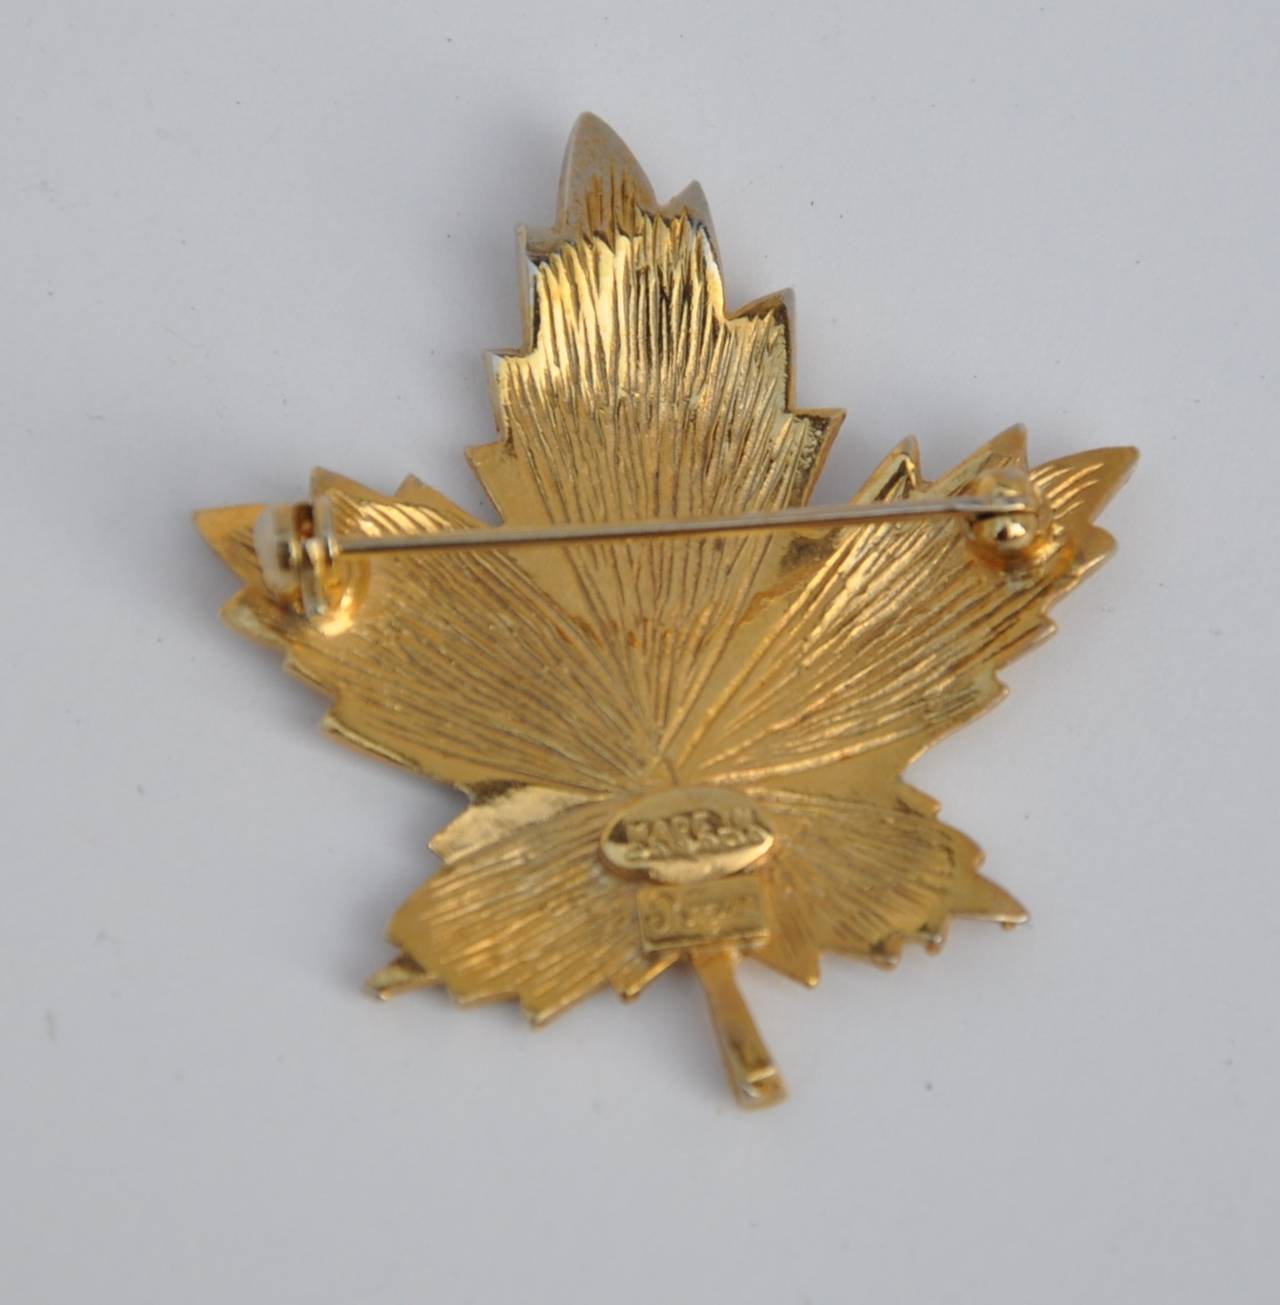 Keyes wonderfully detailed gilded gold hardware "Leaf" brooch measures 1 7/8" in length, 1 5/8" in width and 1/8" in depth.